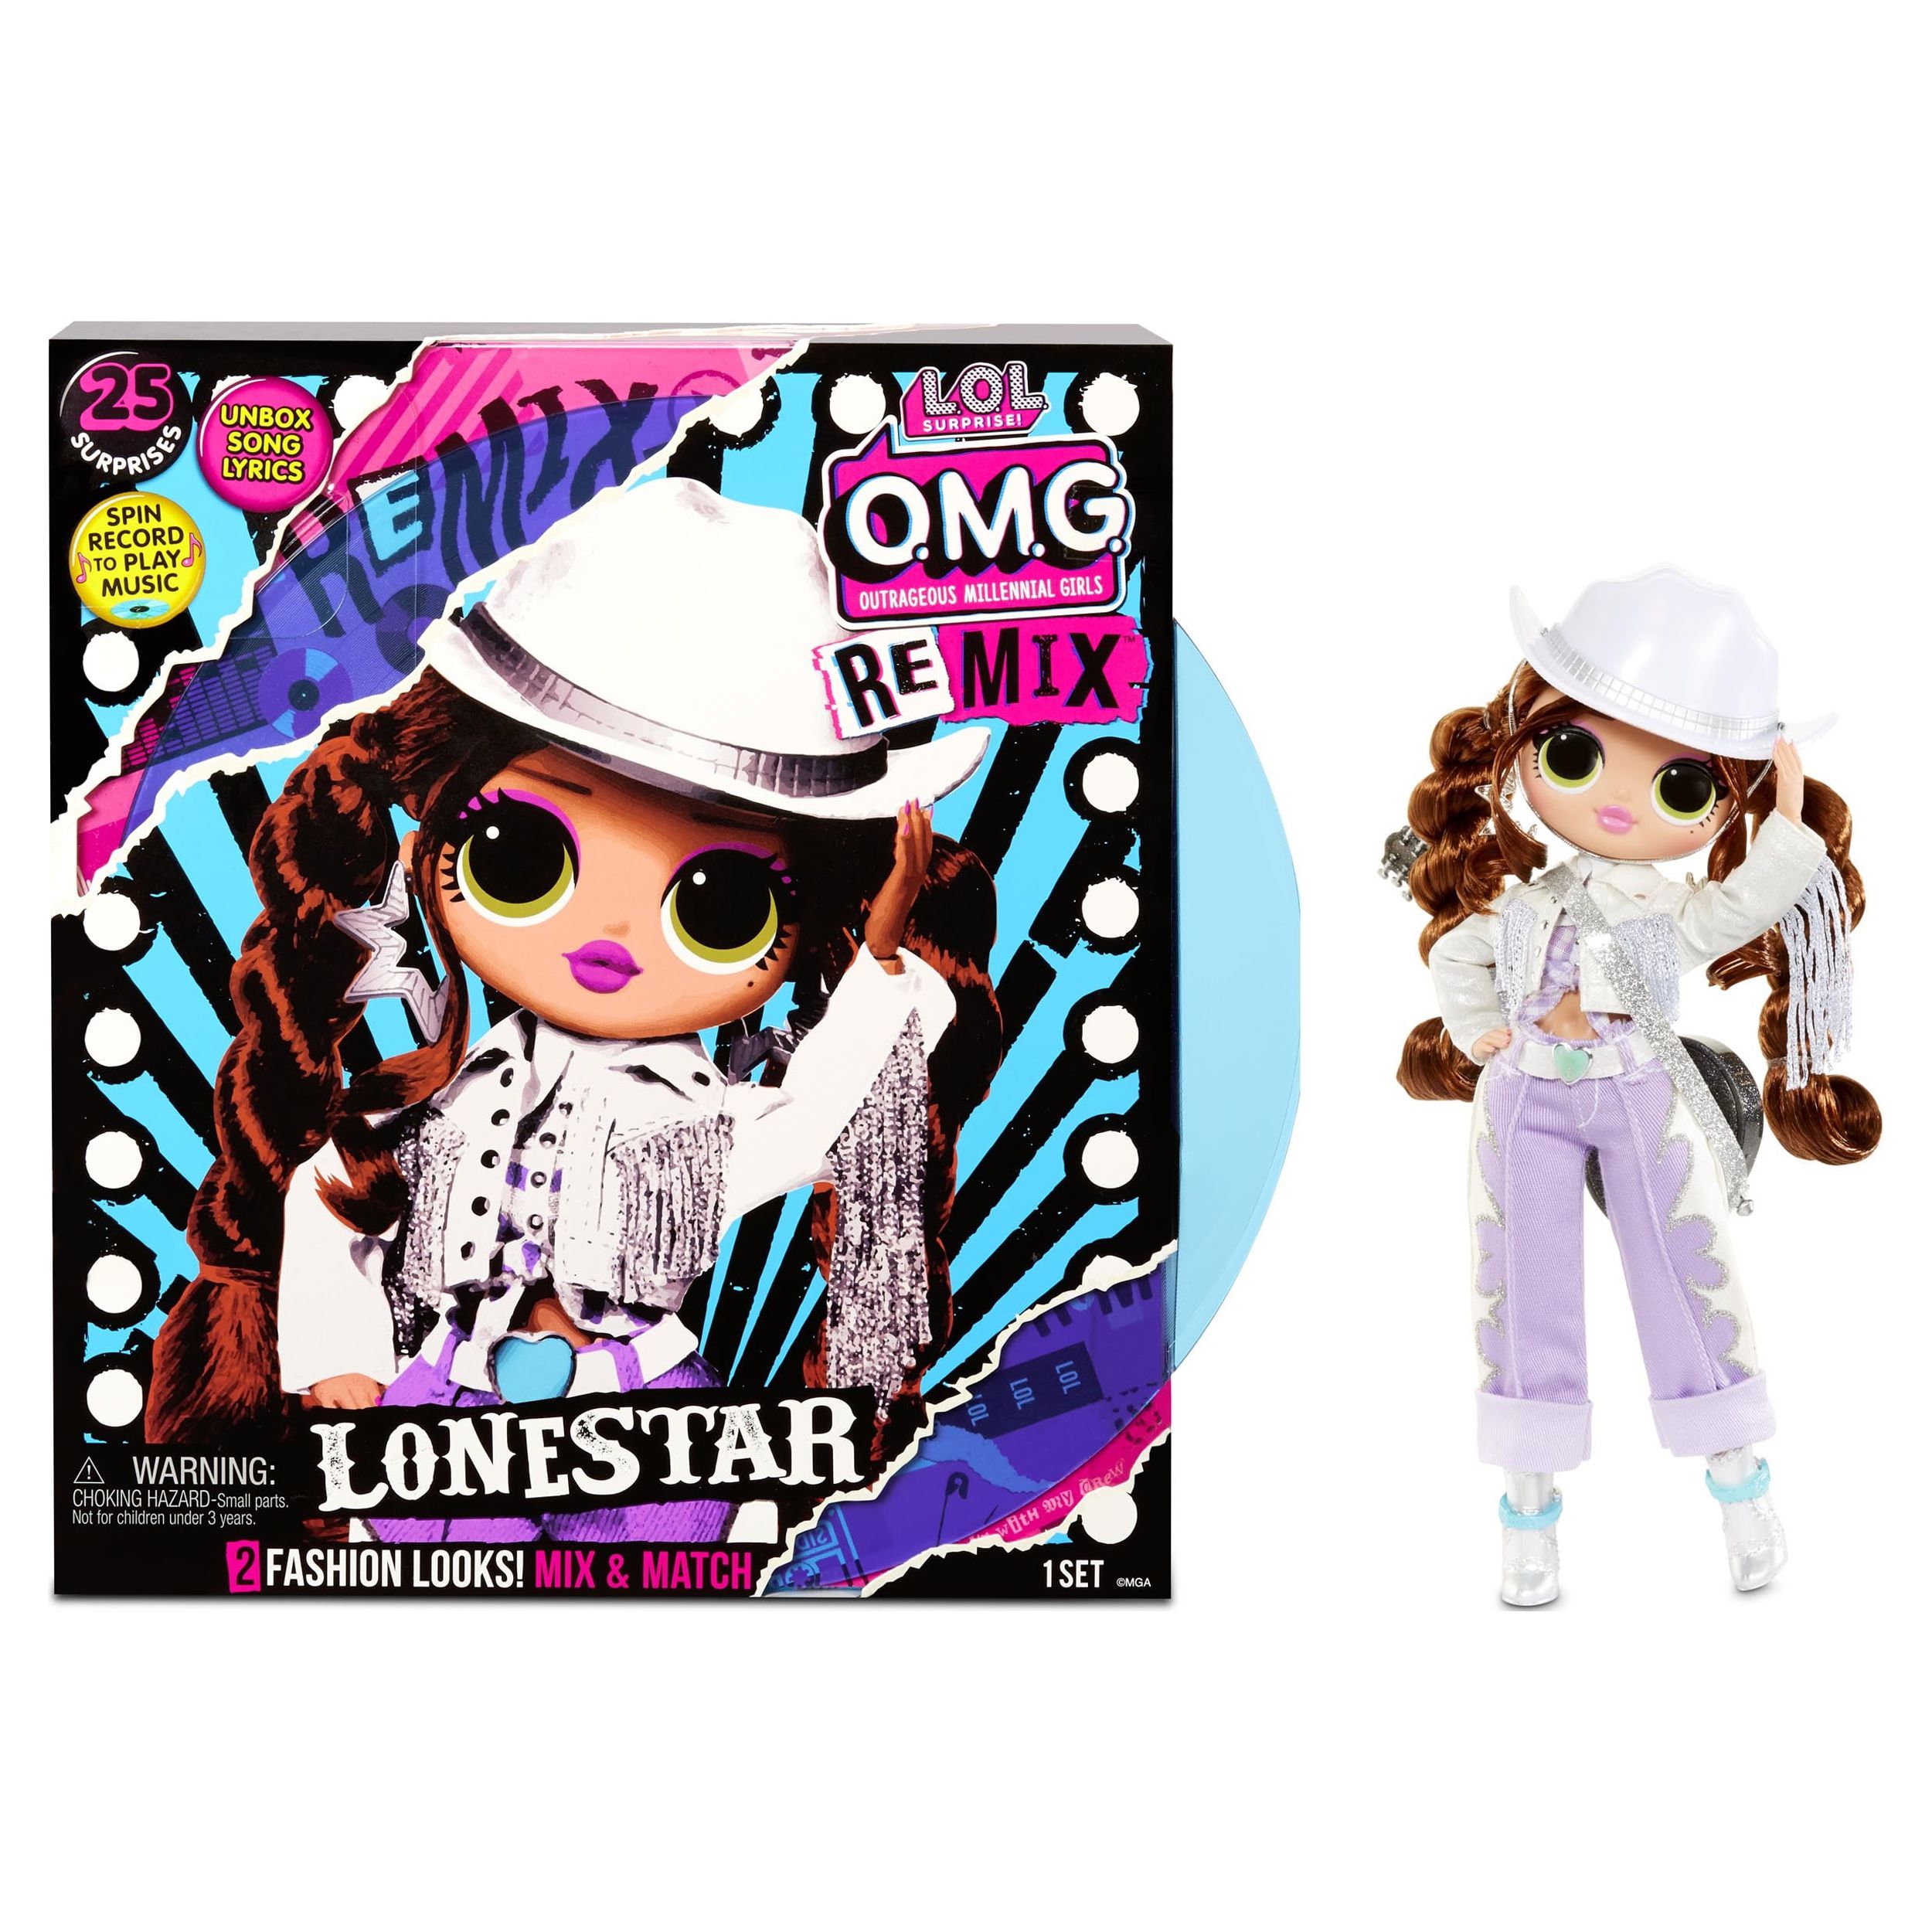 LOL Surprise! OMG Remix Lonestar Fashion Doll 25 Surprises - image 1 of 8